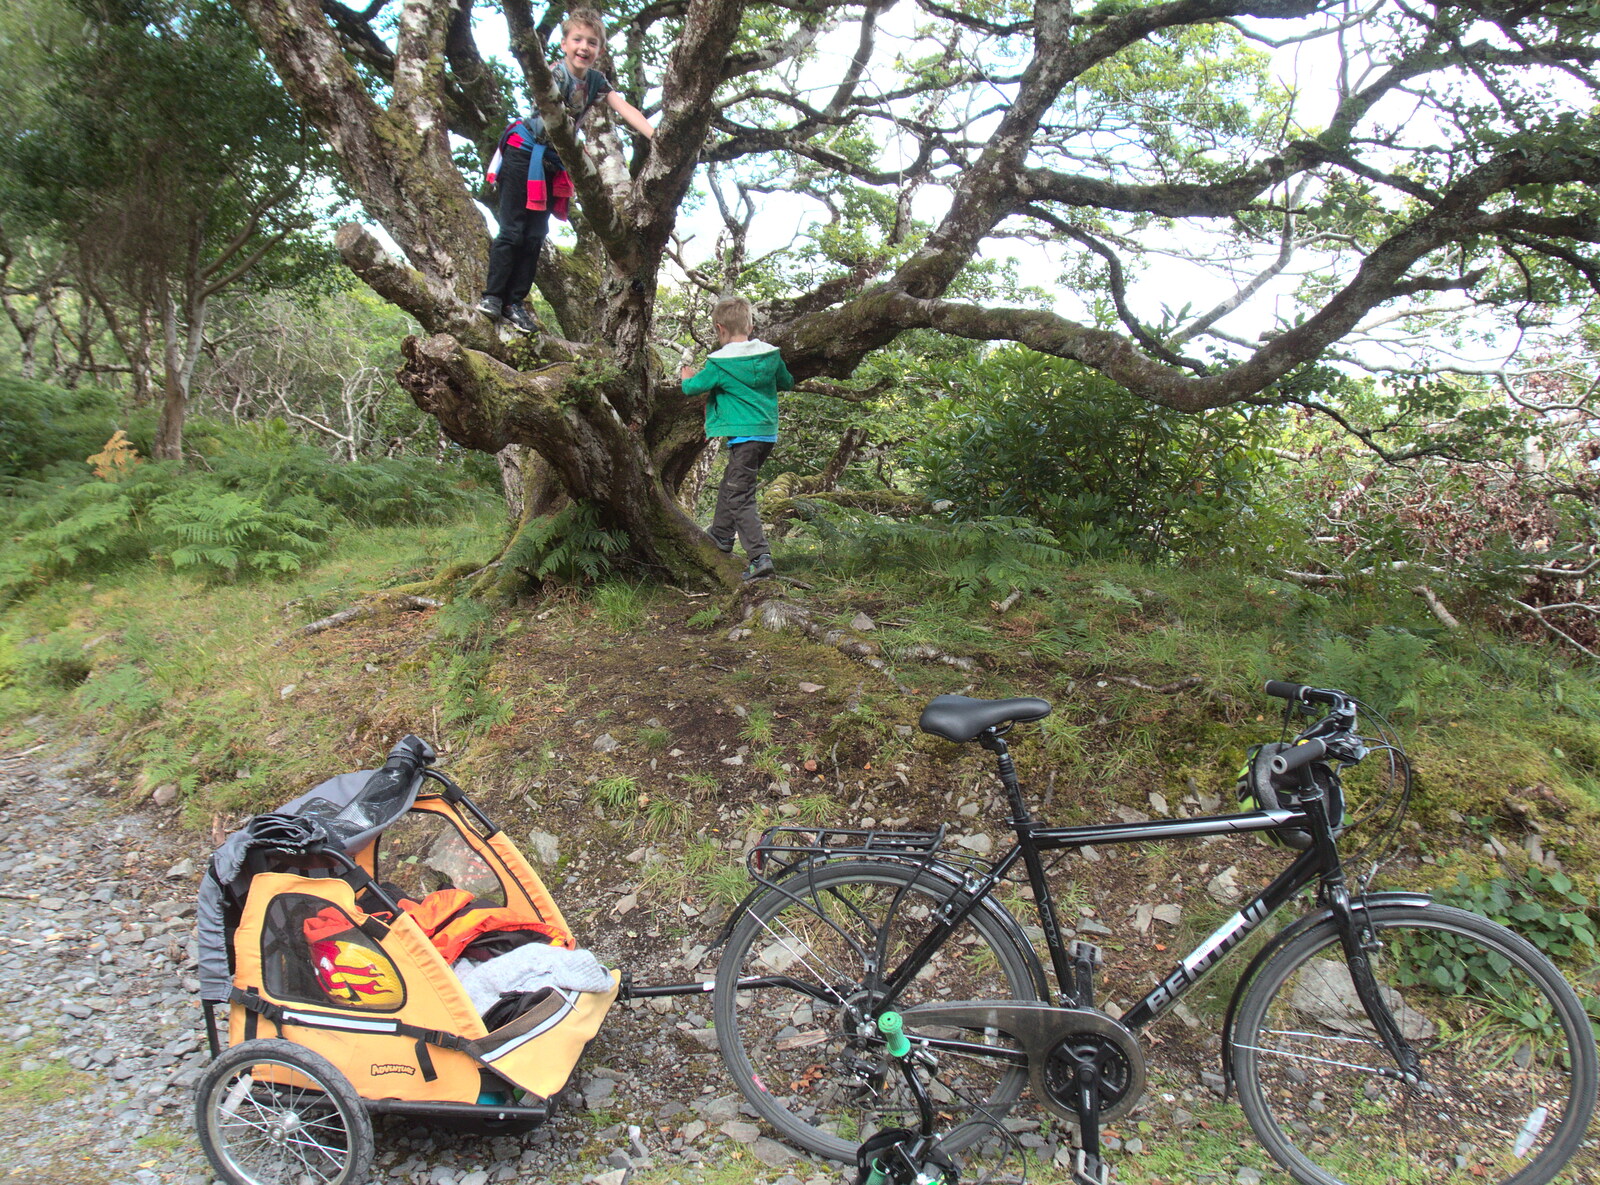 The boys climb a tree from A Bike Ride to Mulranny, County Mayo, Ireland - 9th August 2017